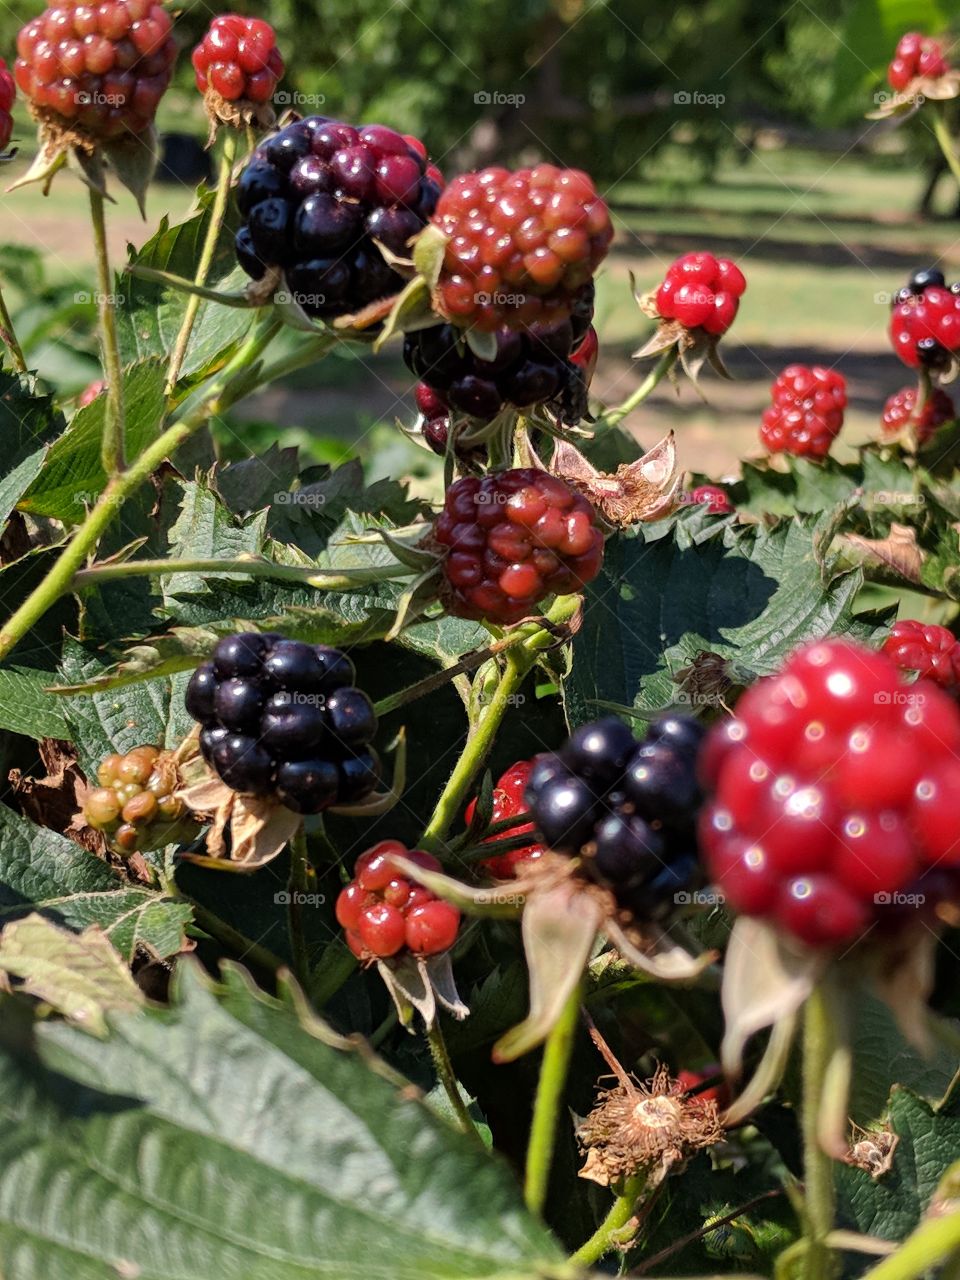 visit a blackberry farm